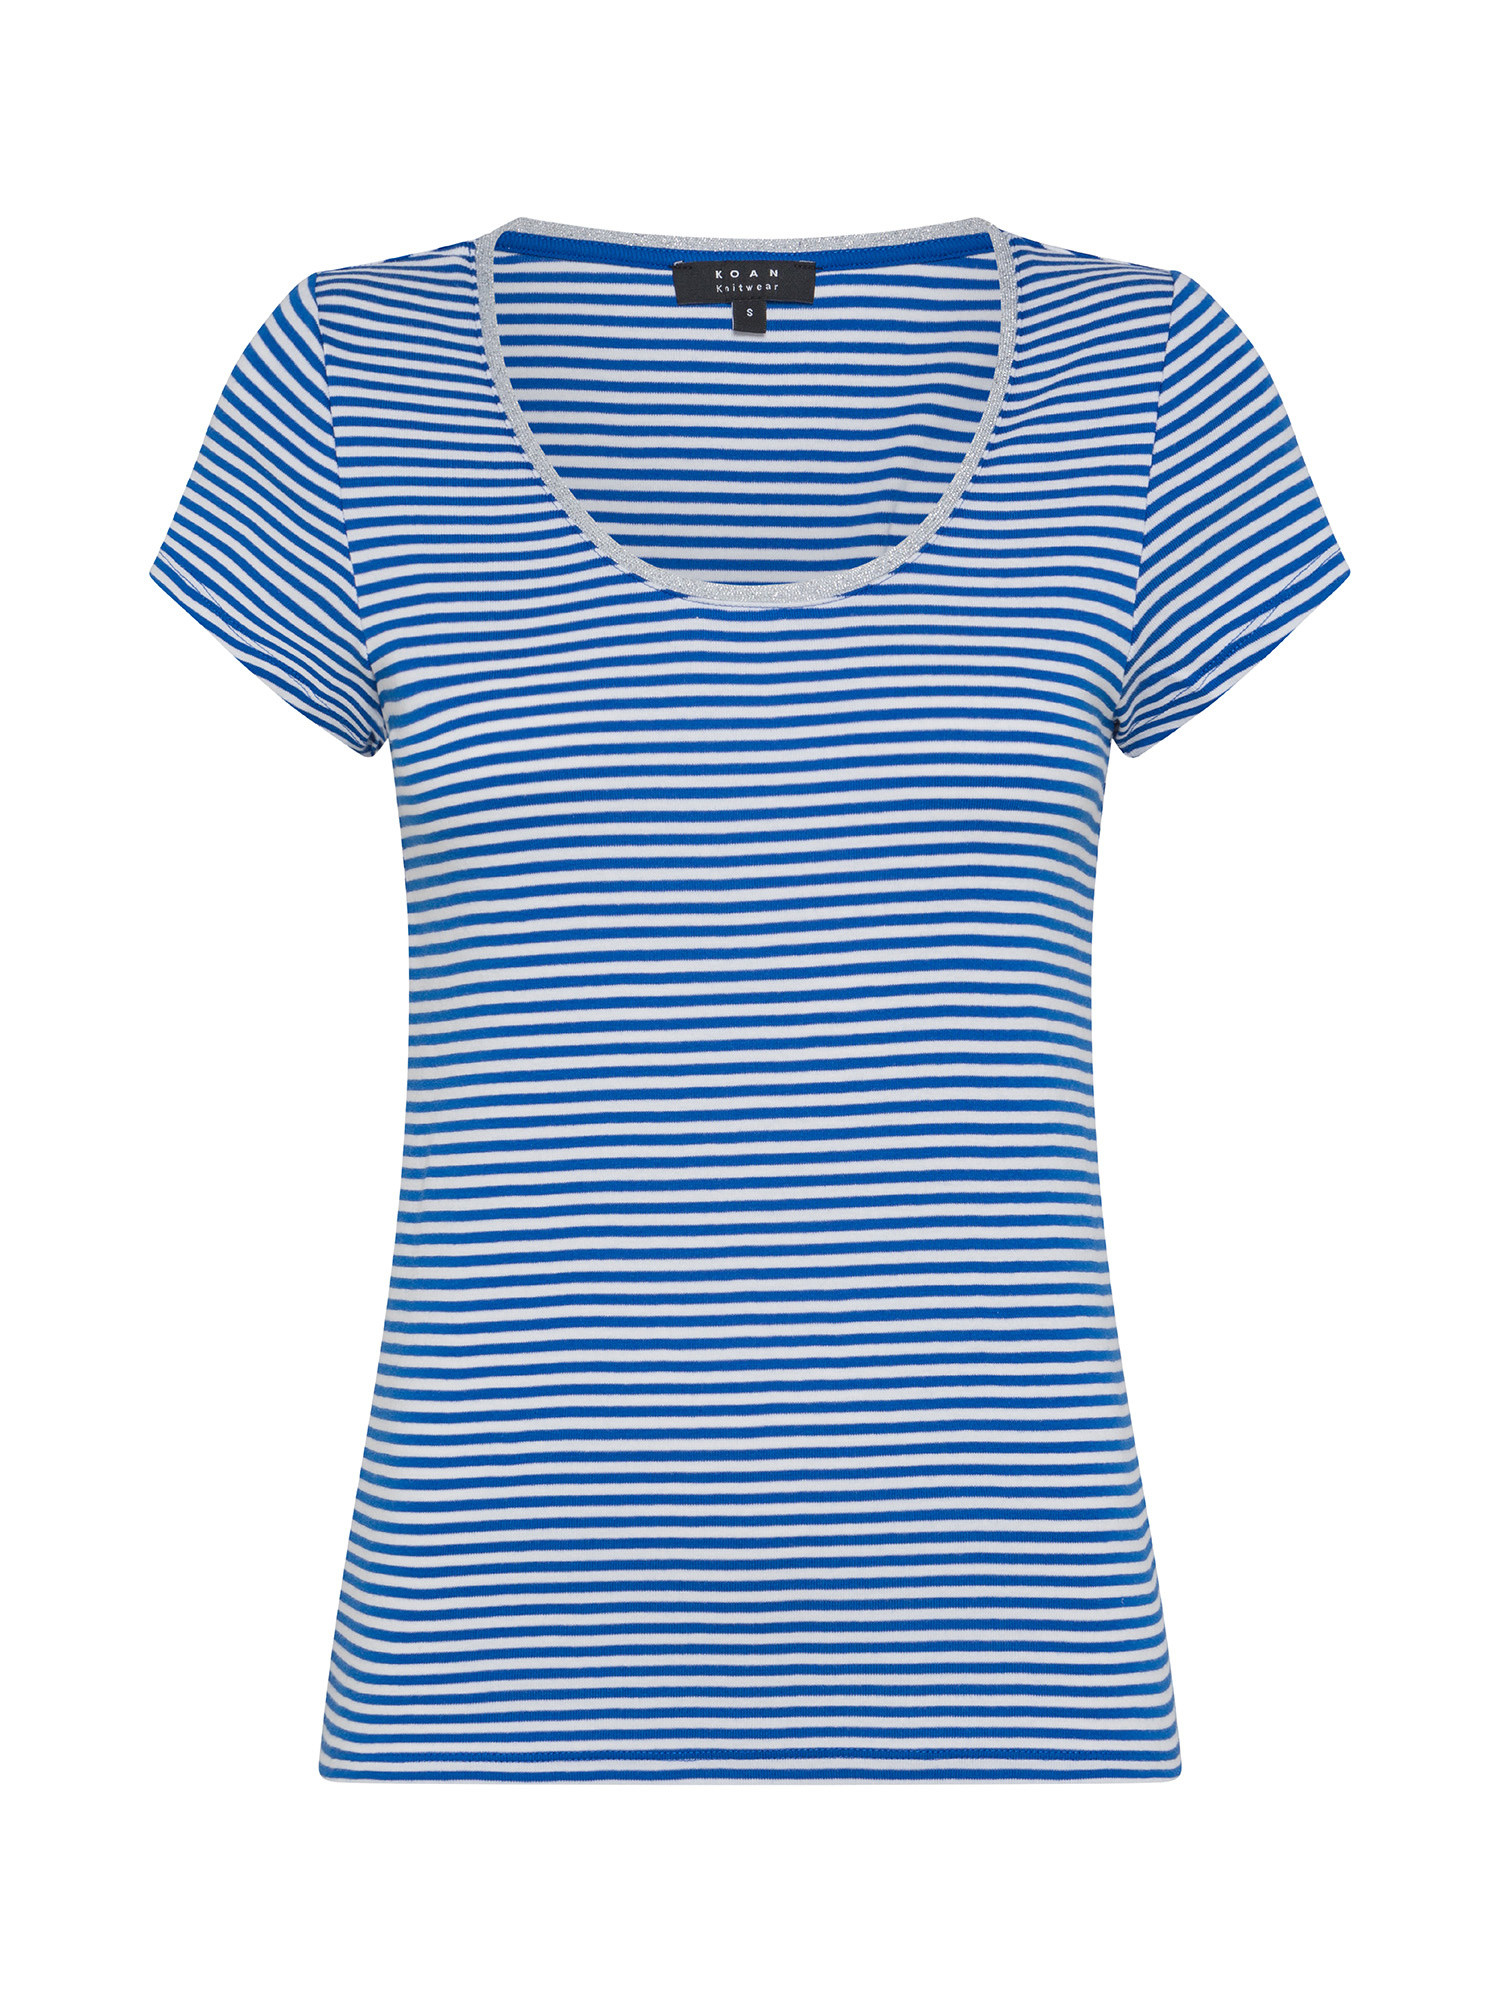 Koan - Striped cotton T-shirt, Royal Blue, large image number 0